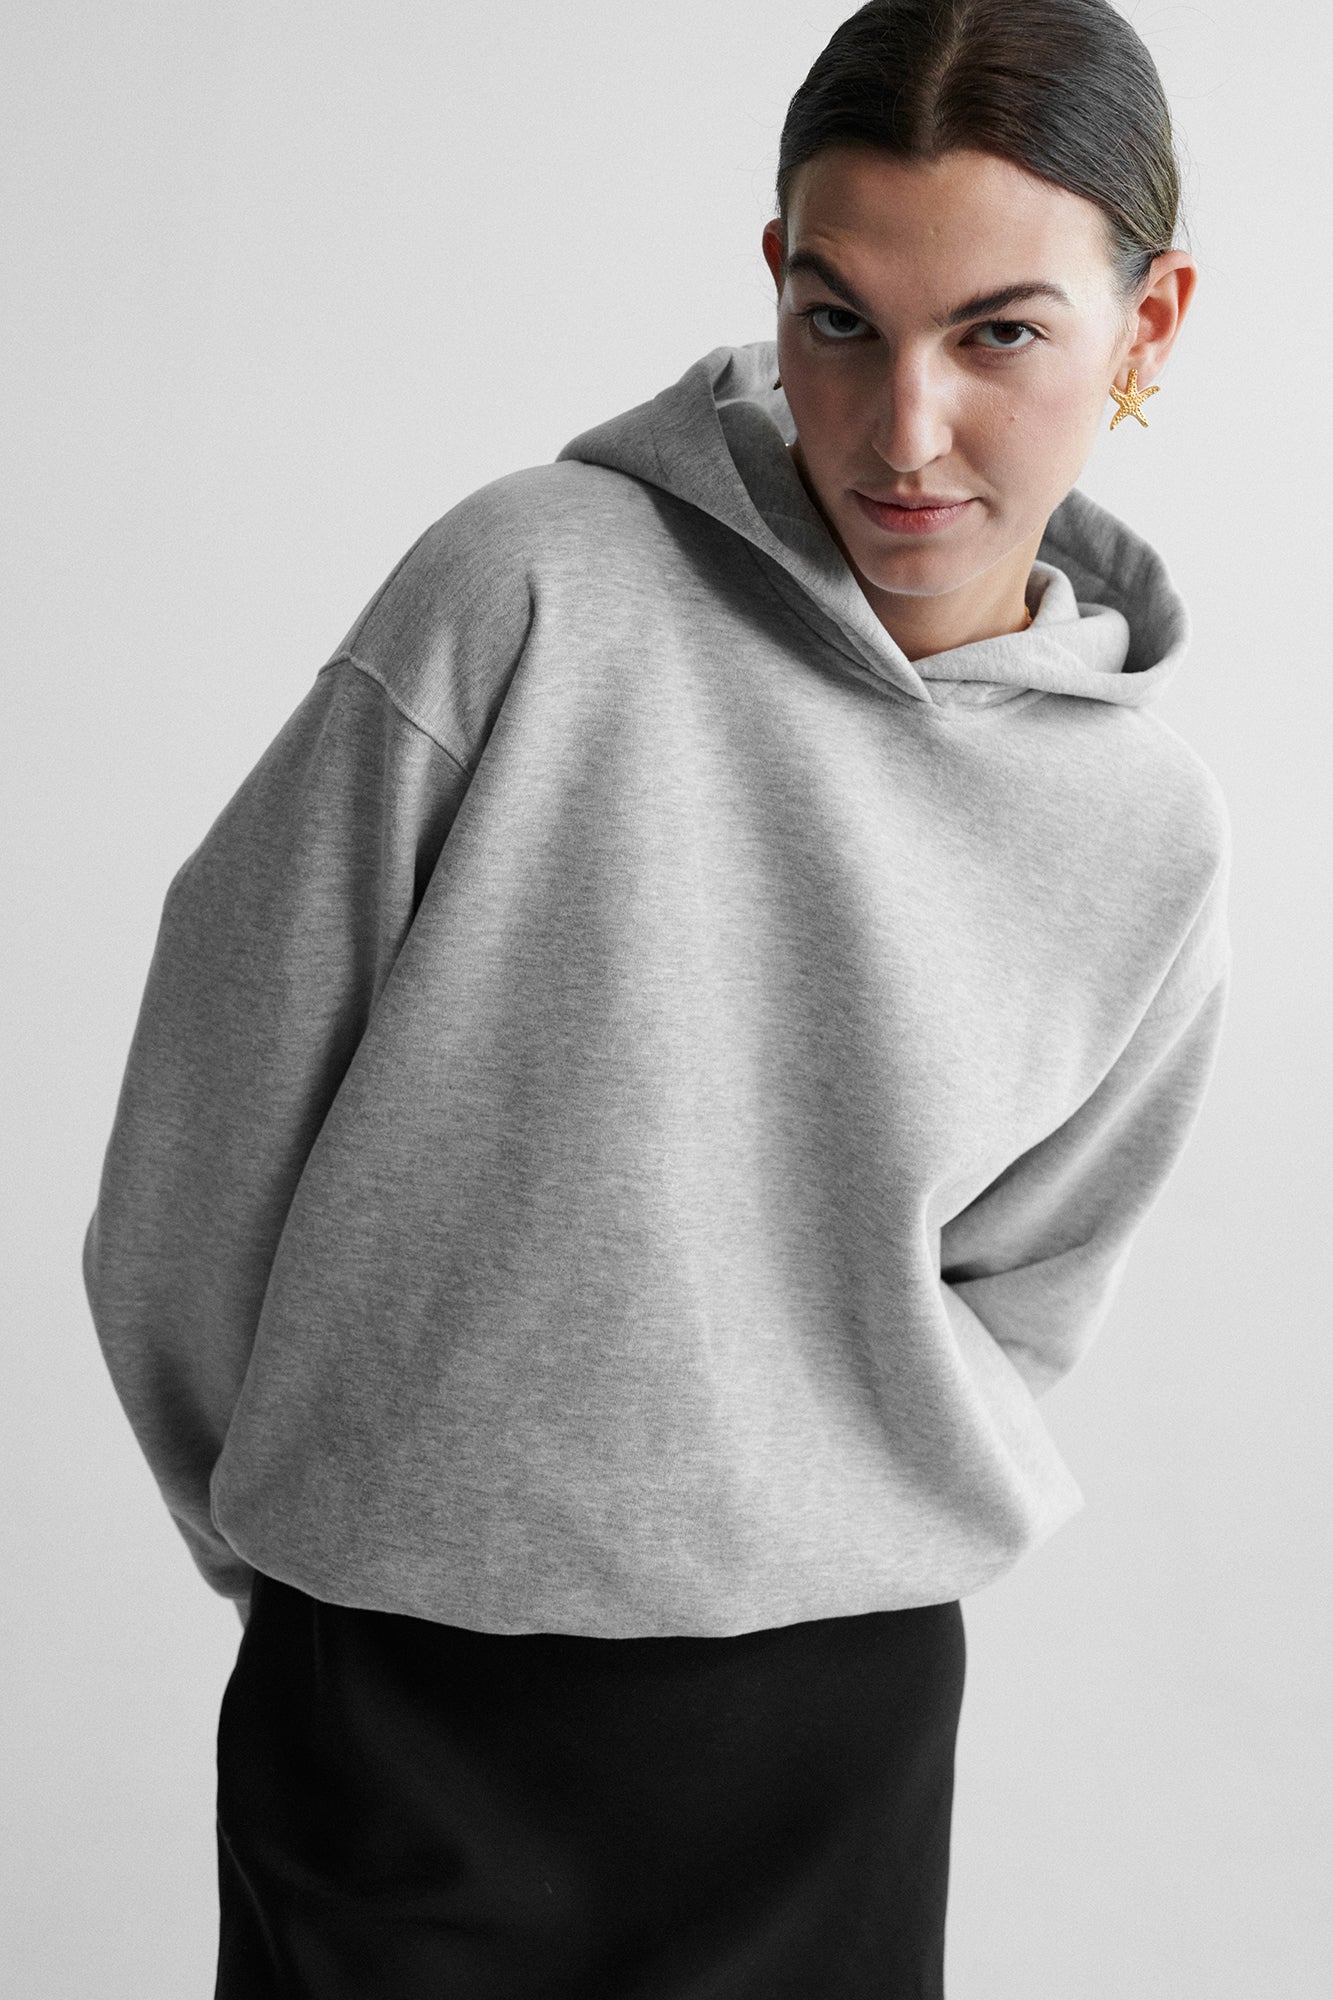  Sweatshirt in cotton / 17 / 15 / mist grey *skirt-in-tencel-07-07-onyx-black* ?The model is 178 cm tall and wears size XS/S?